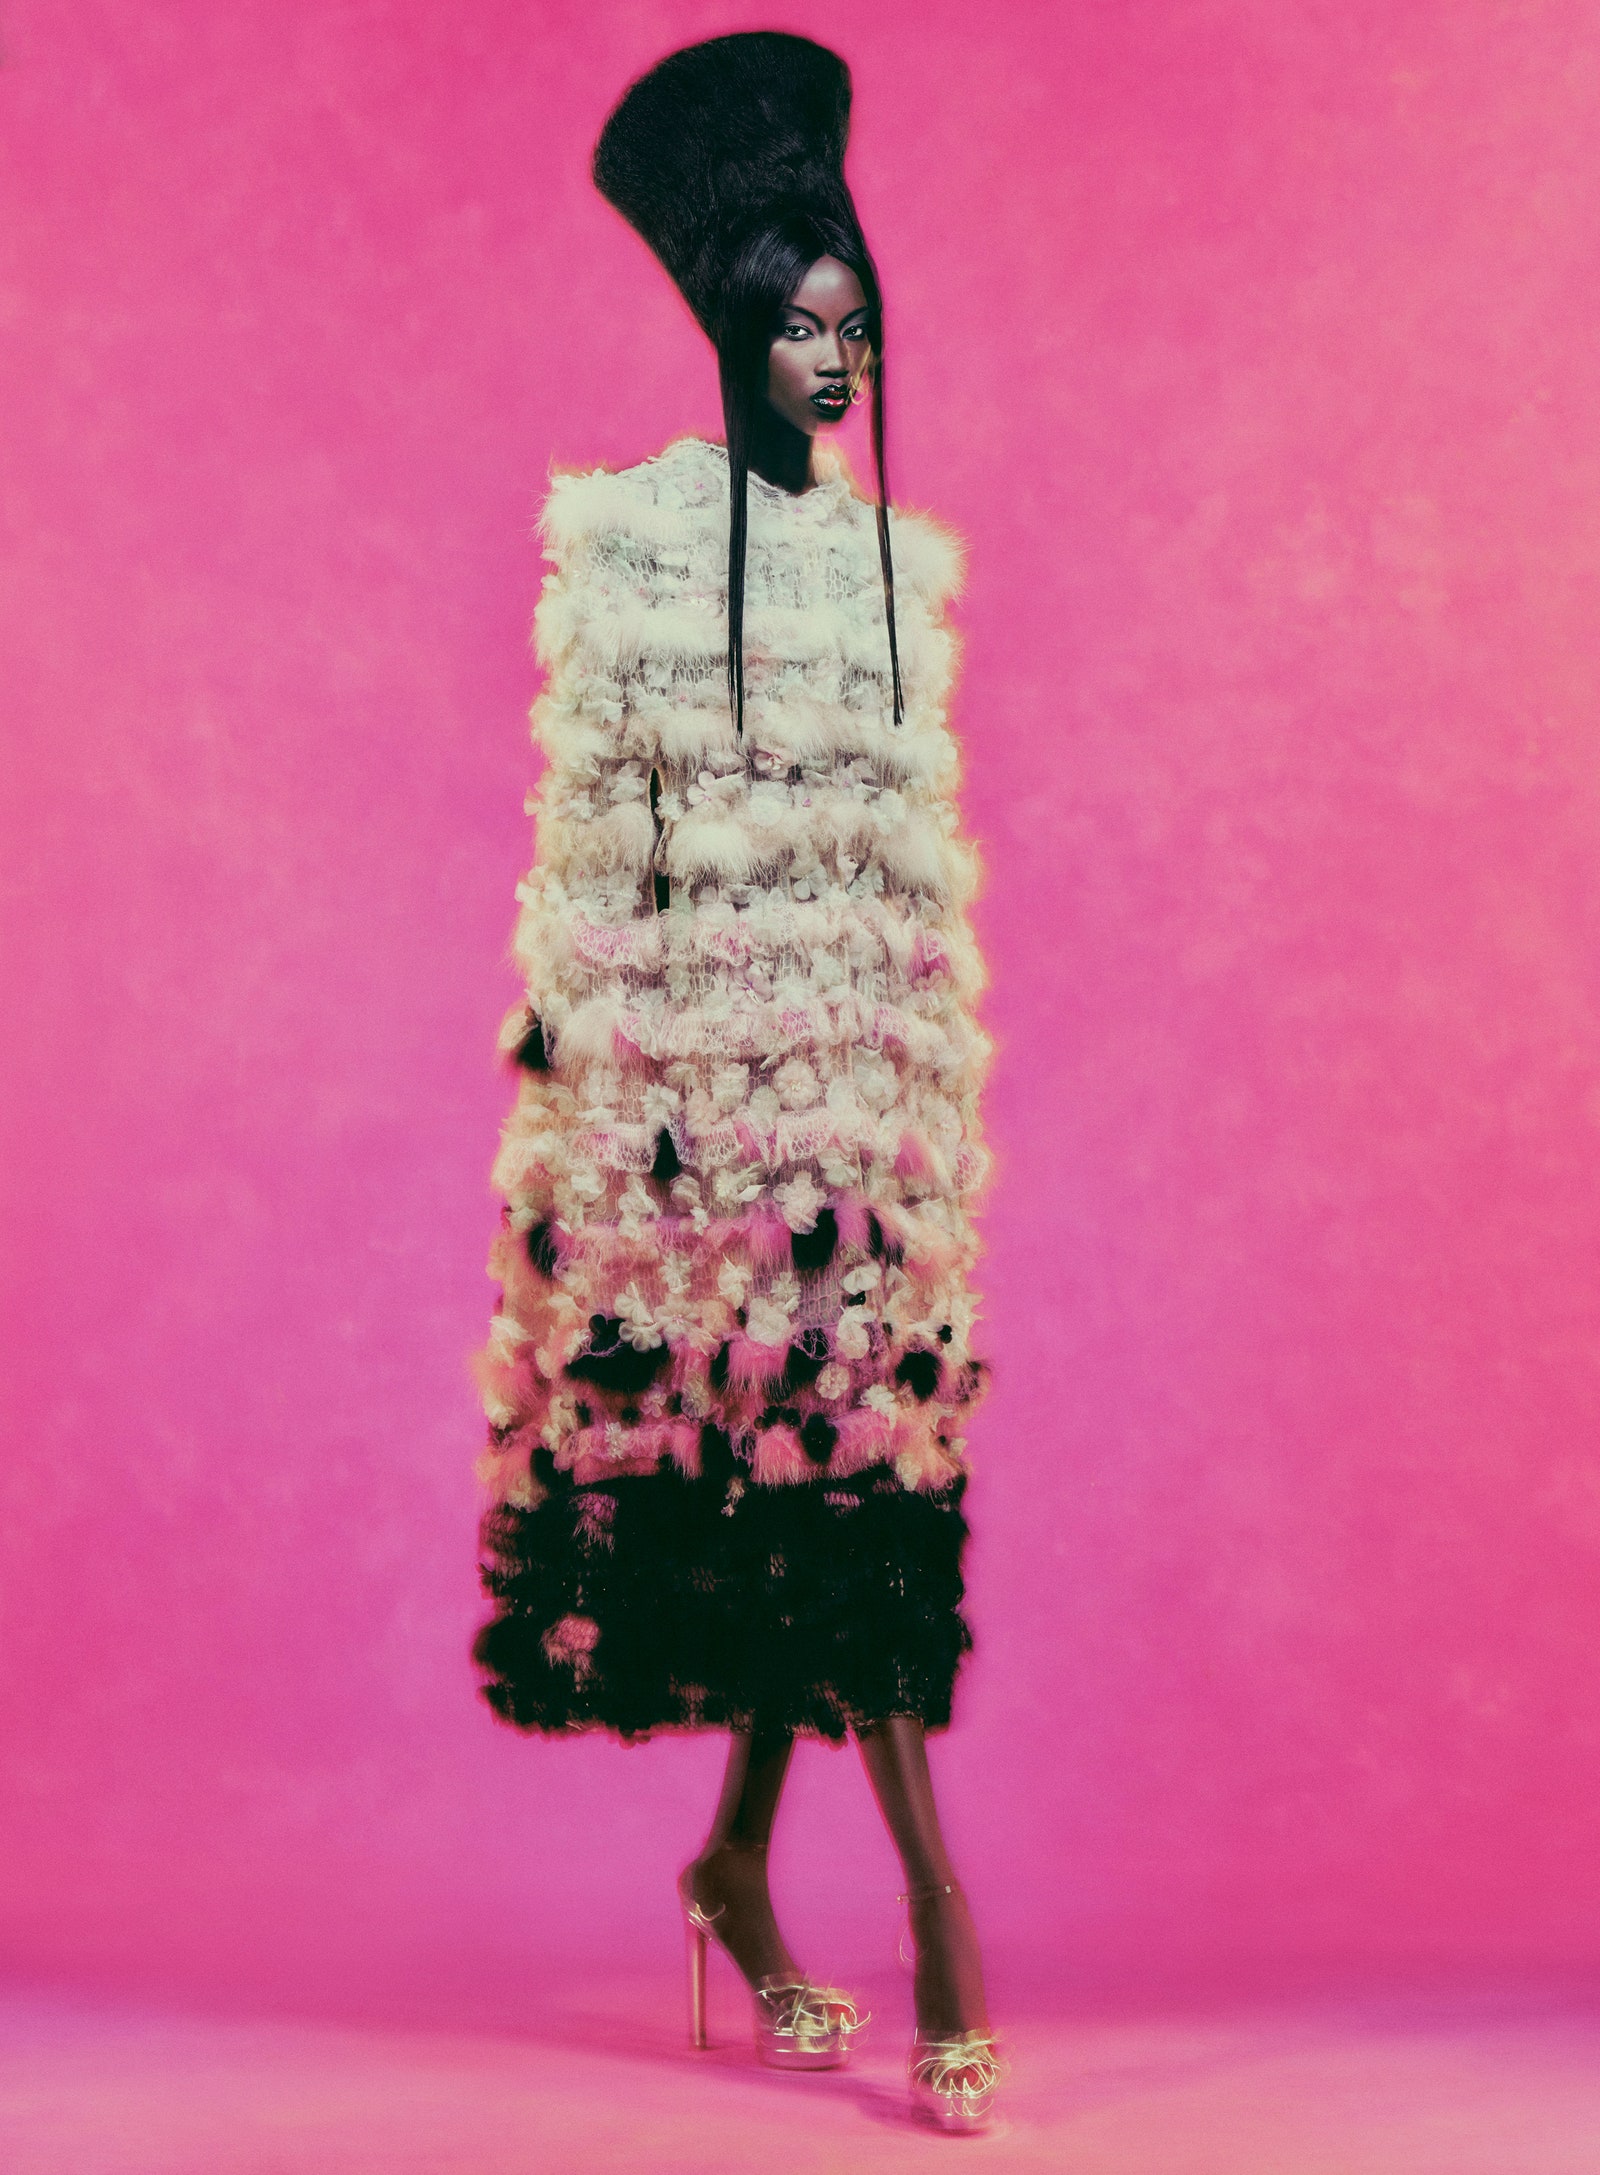 Anok Yai in Fendi haute fourrure cape from spring 2016 Karl Lagerfeld